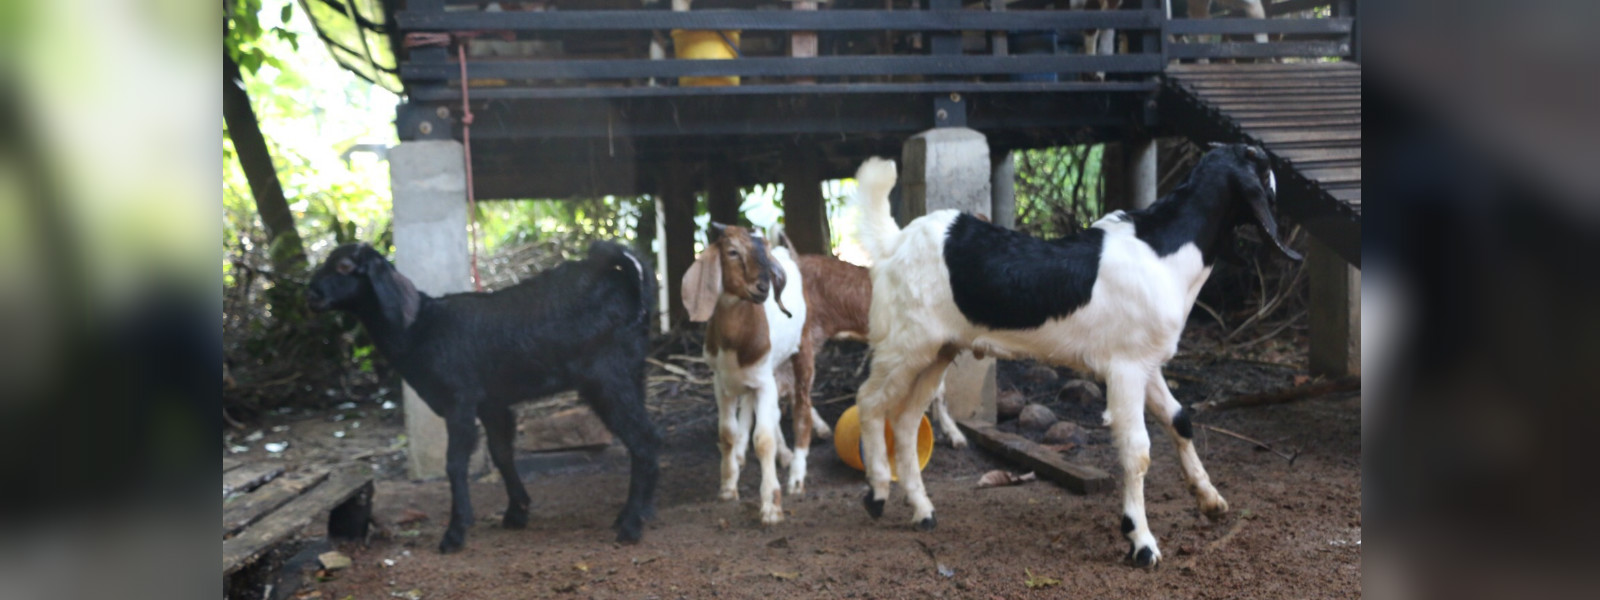 Wrong vaccination kills 100 goats in Gampola farm 